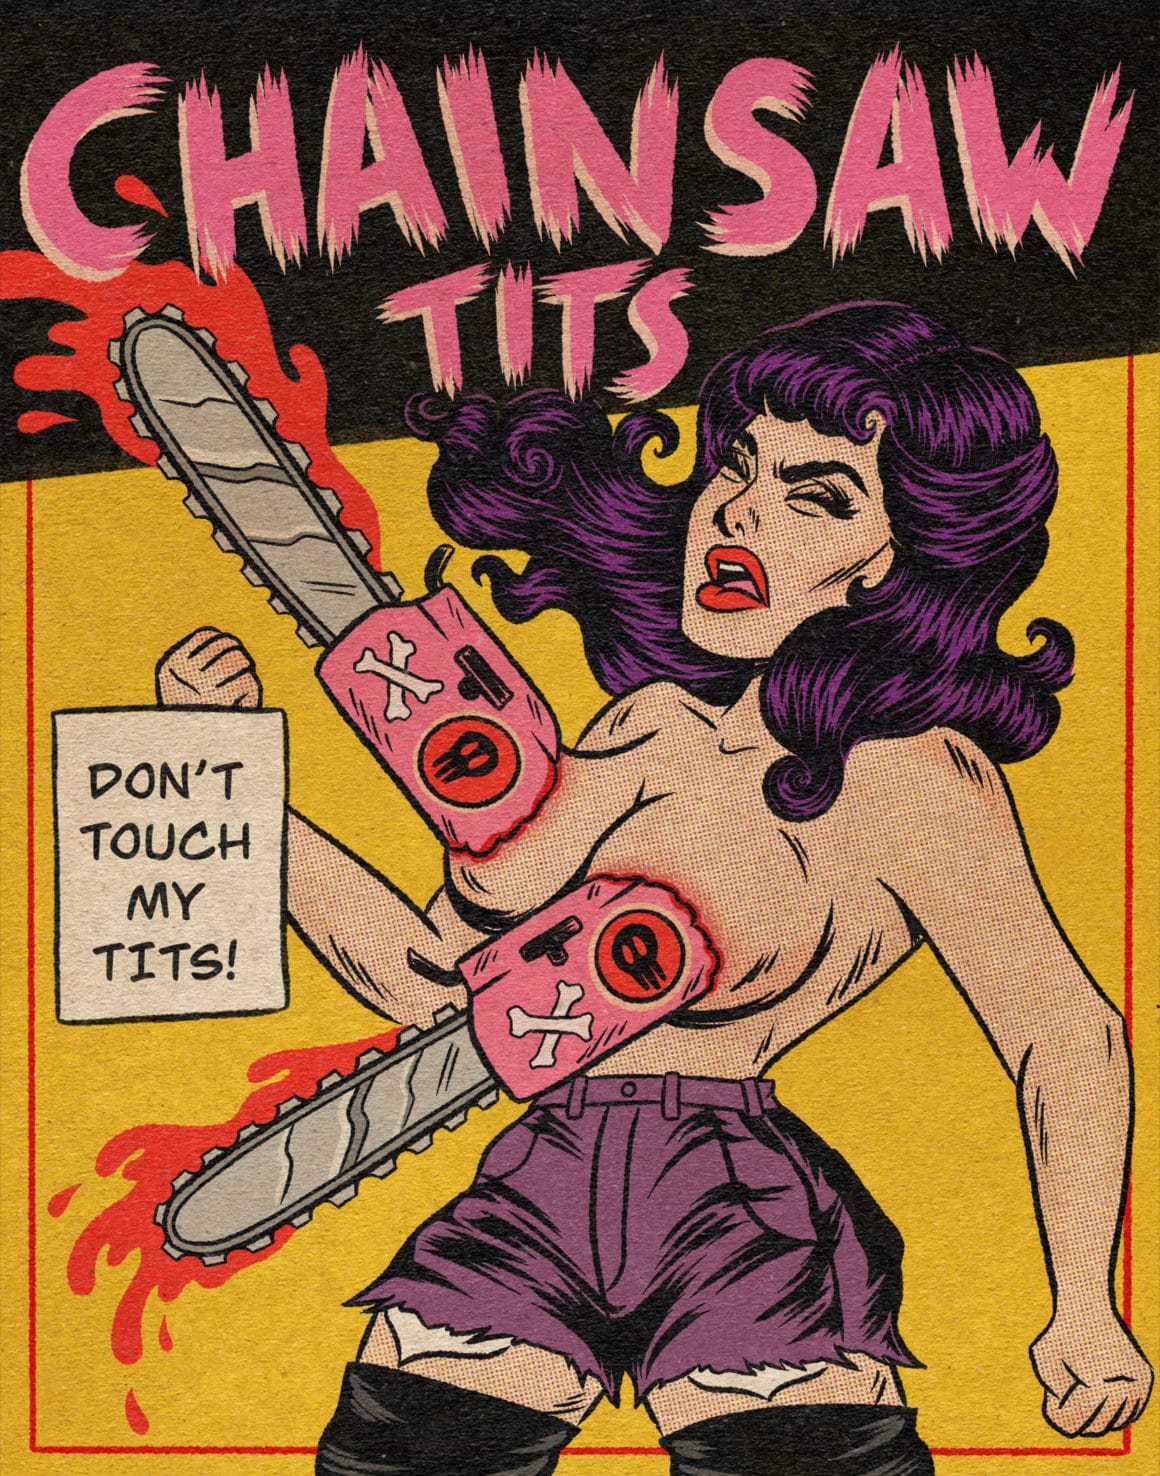 Chainsaw tits